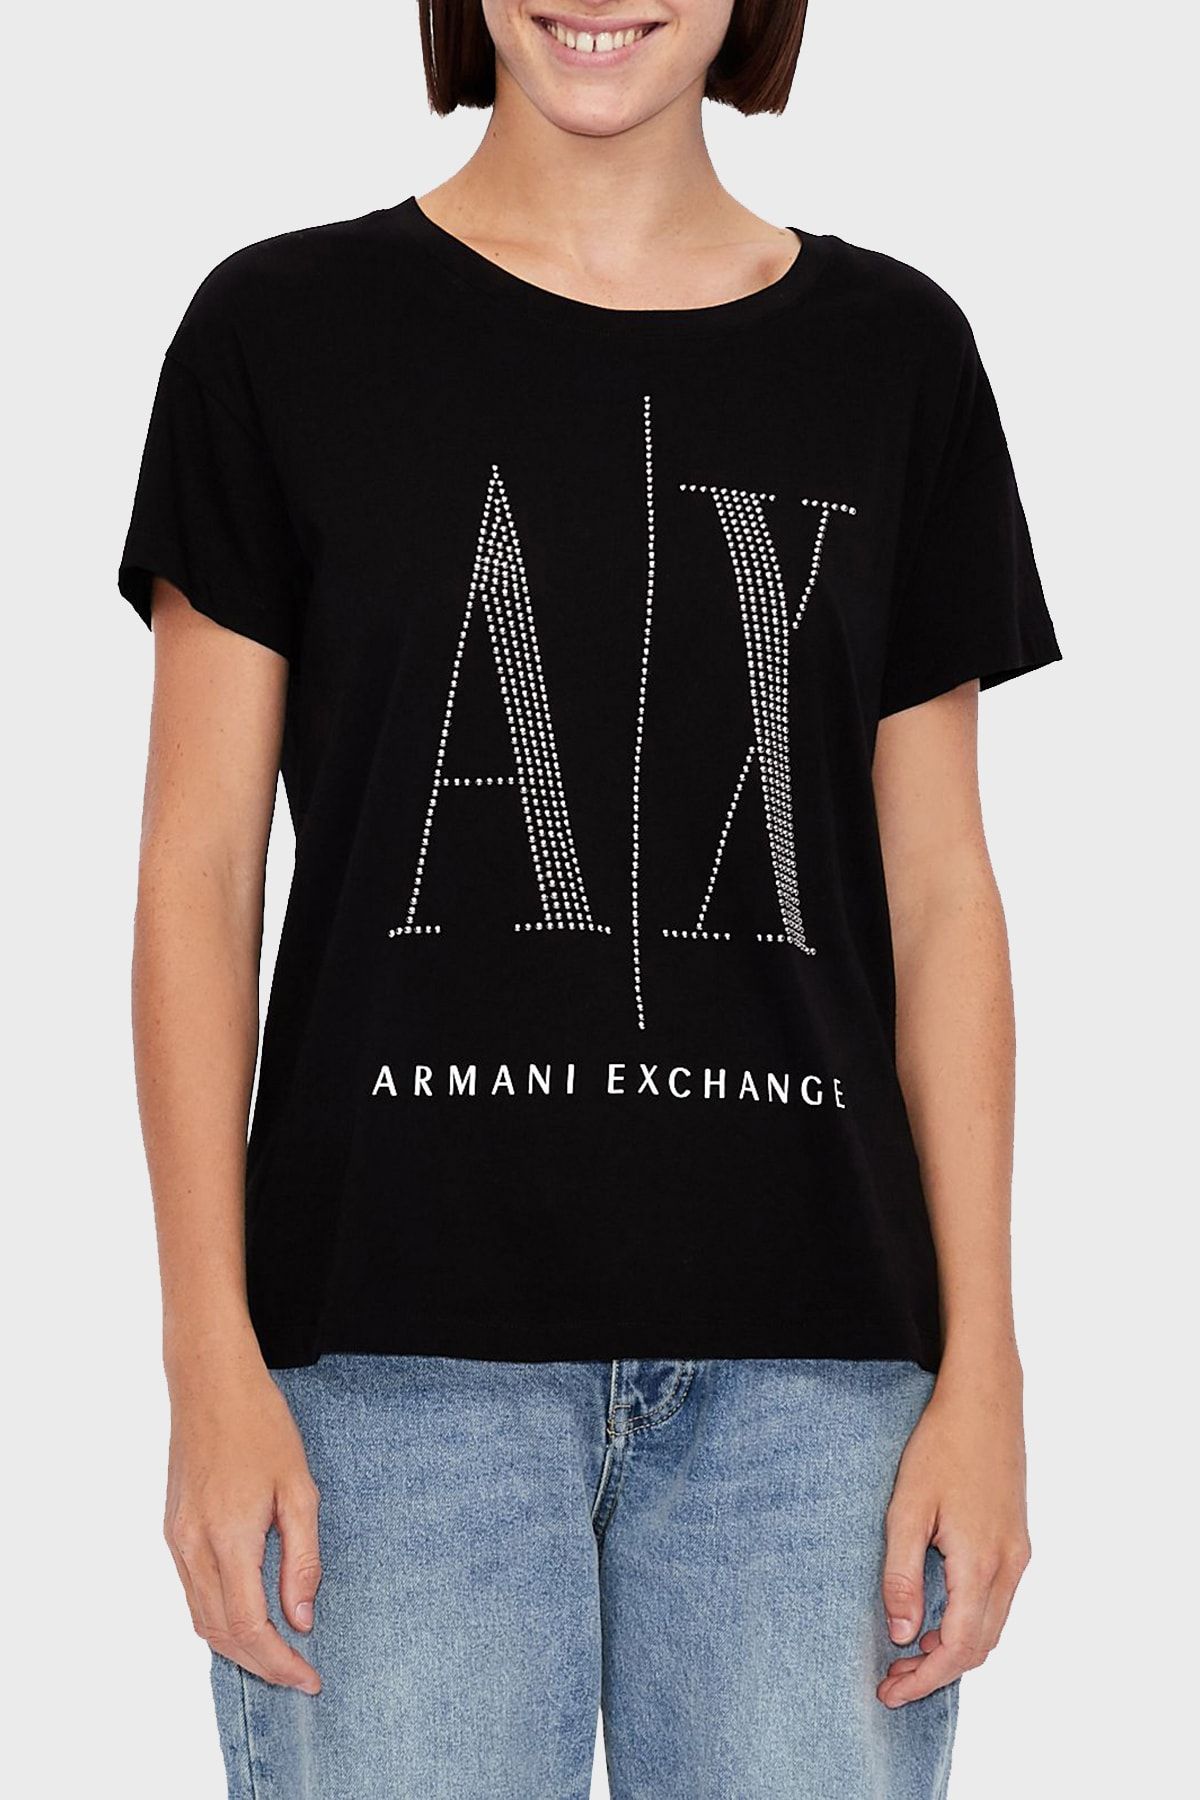 Armani Exchange Kadın Siyah % 100 Pamuklu Baskılı Bisiklet Yaka T Shirt T Shirt 8nytdx Yjg3z 8218